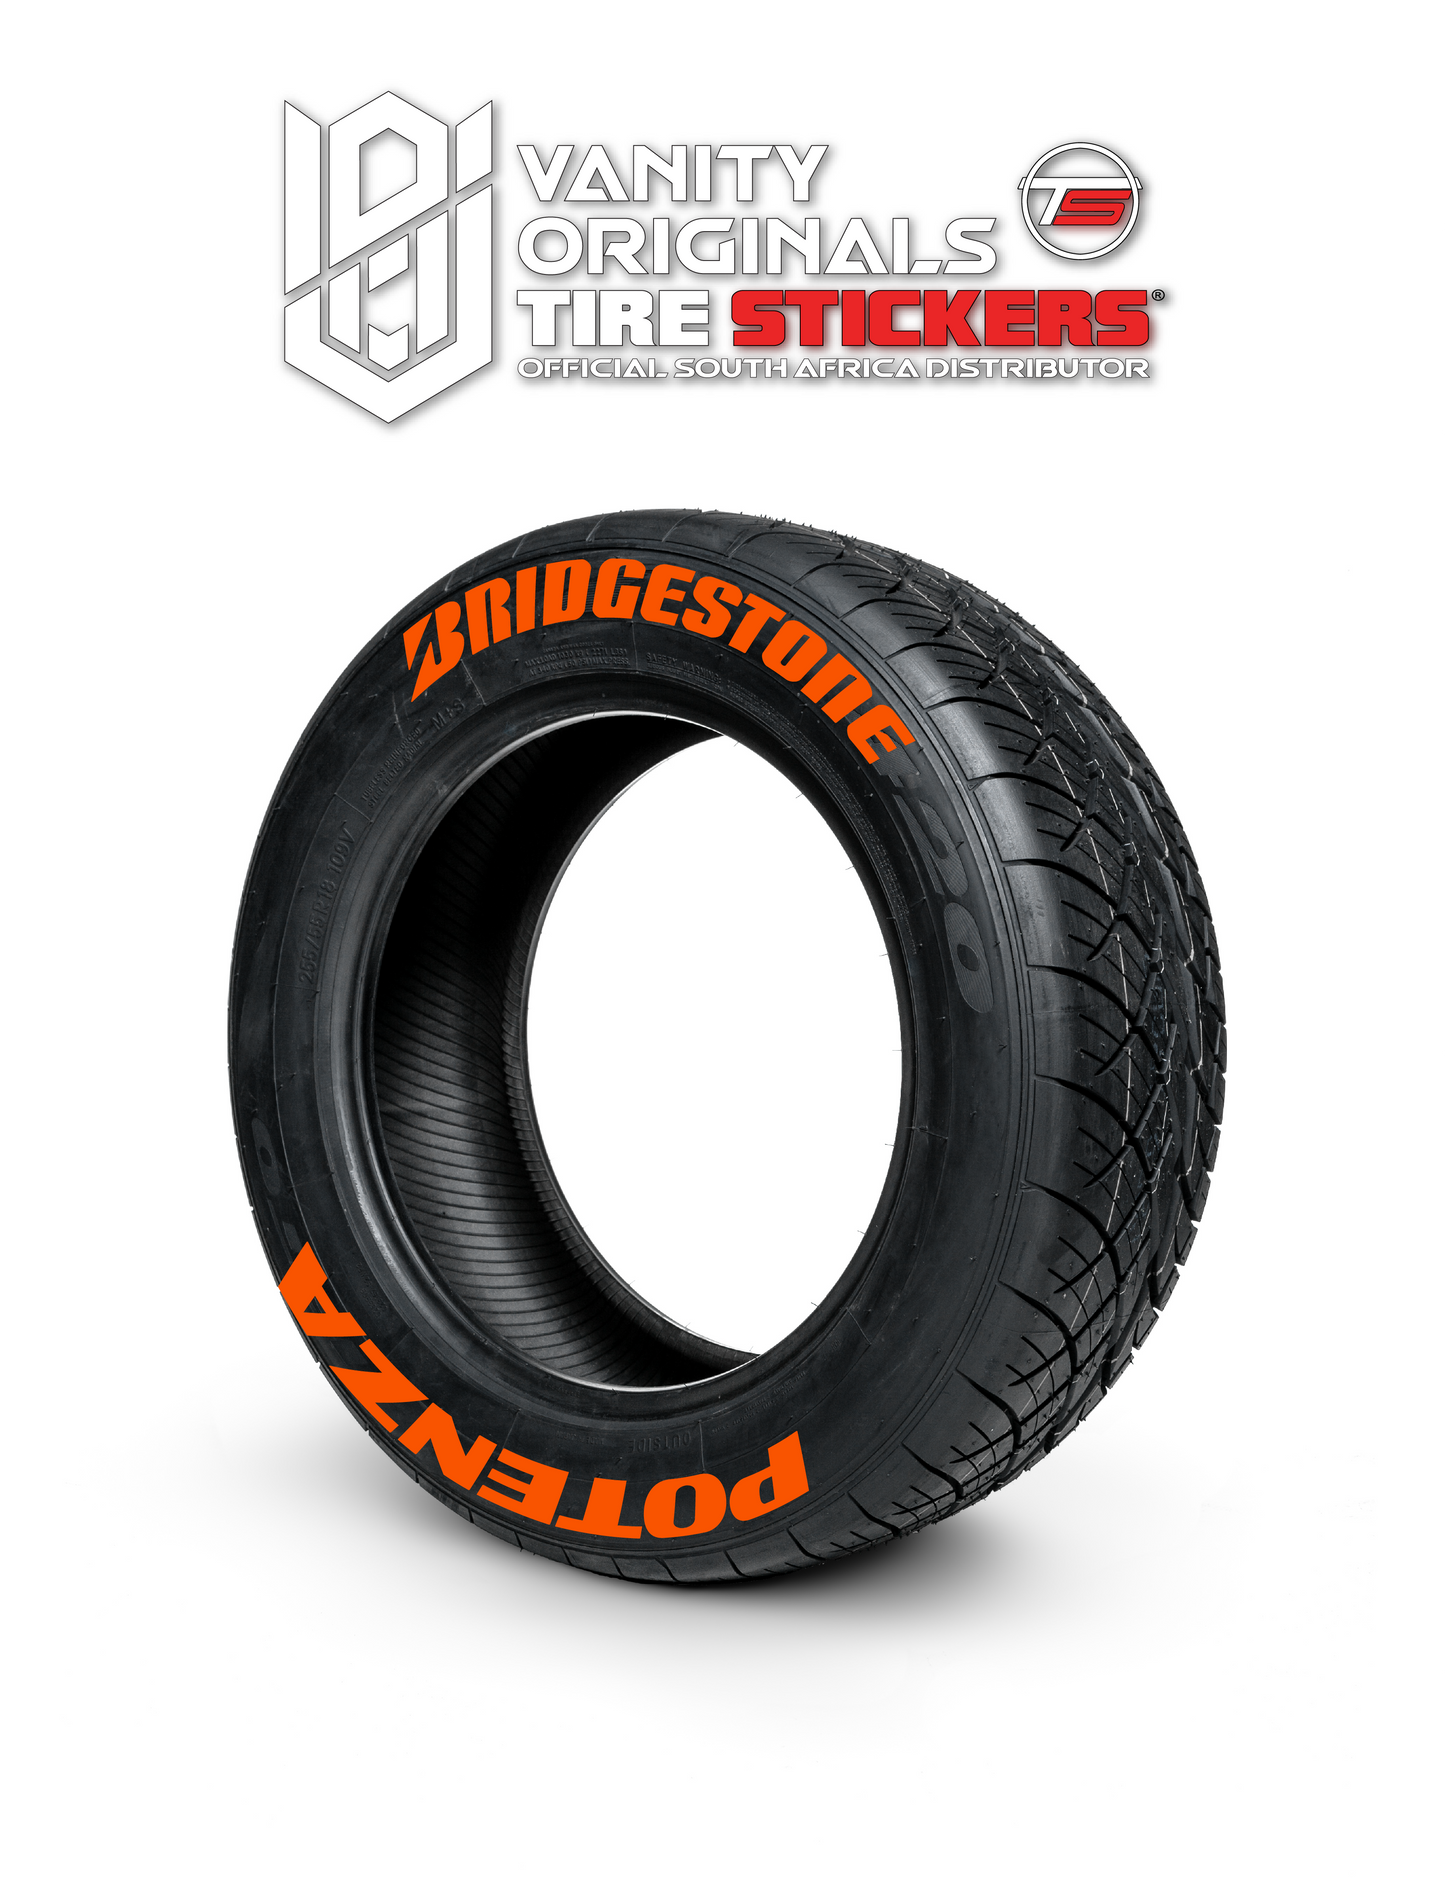 Bridgestone Potenza ( 8x Rubber Decals, Adhesive & Instructions Included )